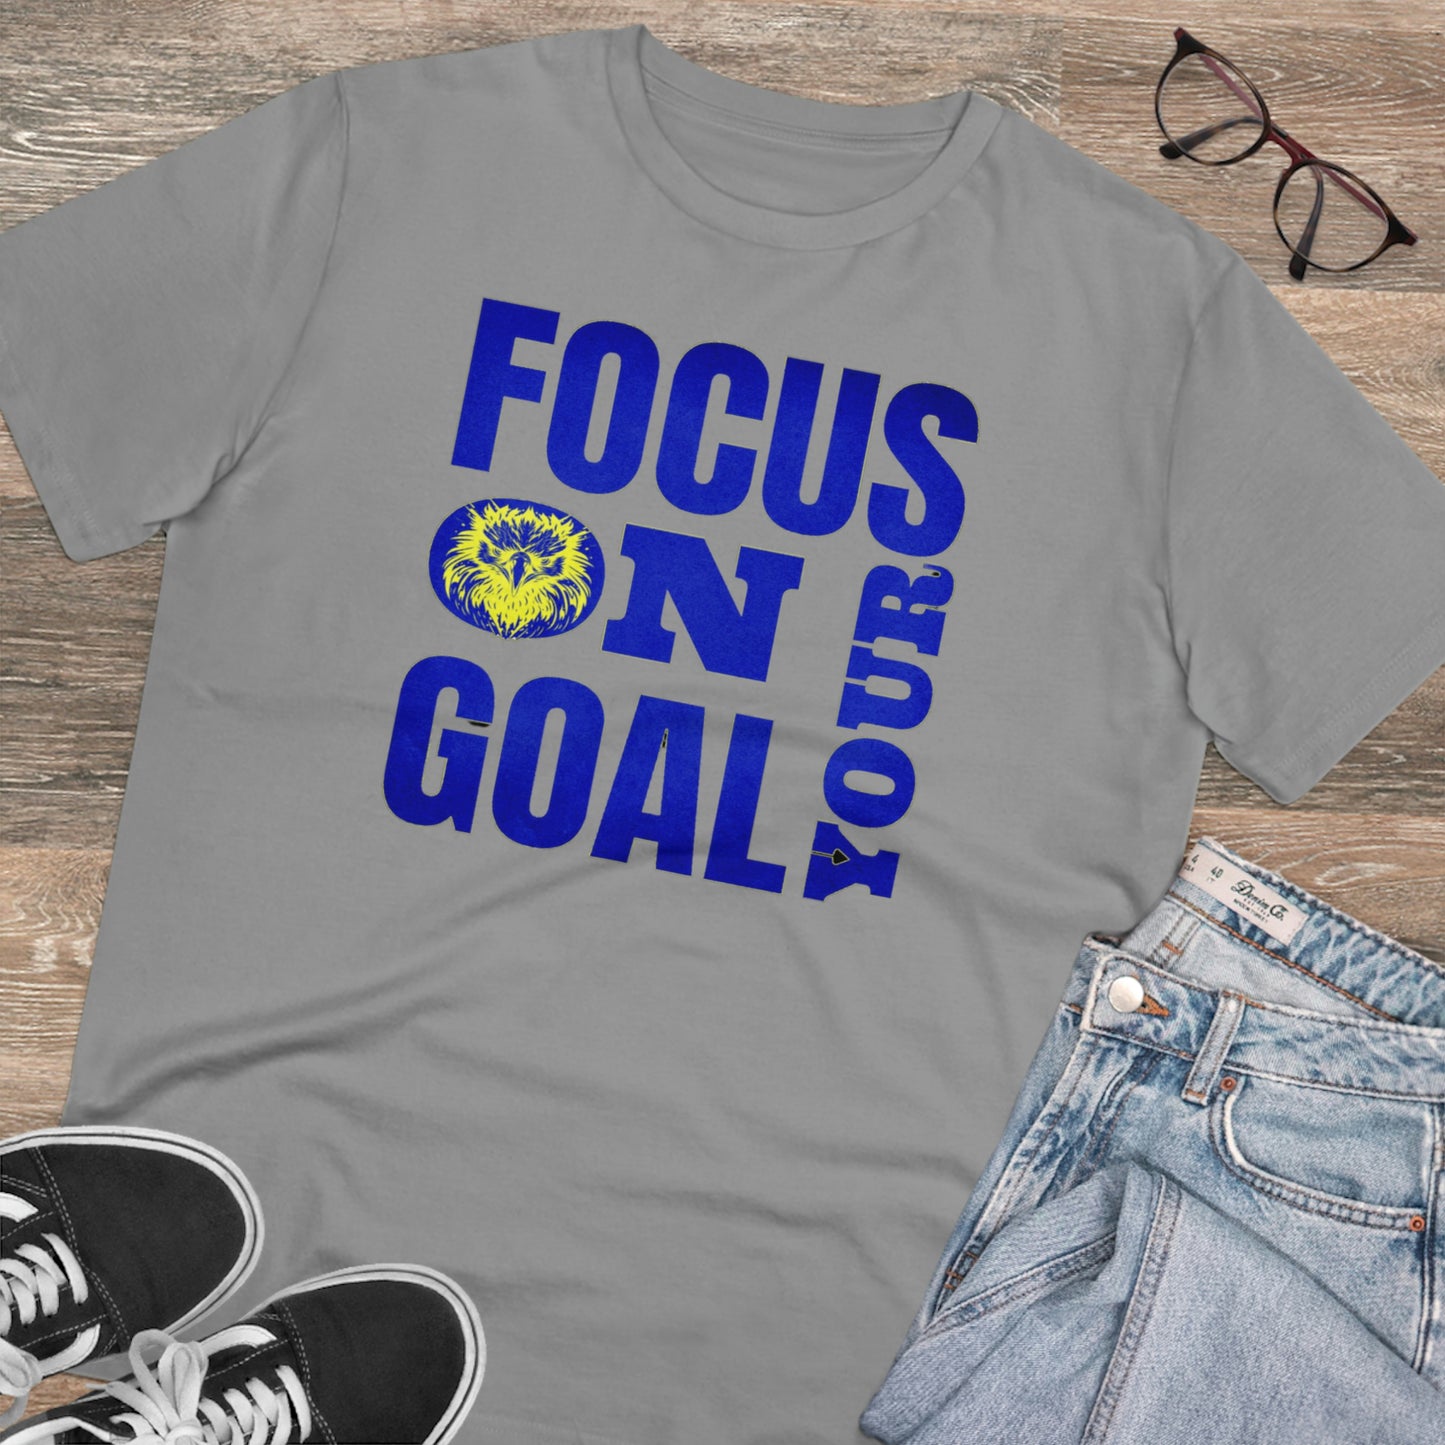 Organic Creator T-shirt - Unisex-Focus on your goal-Eagle